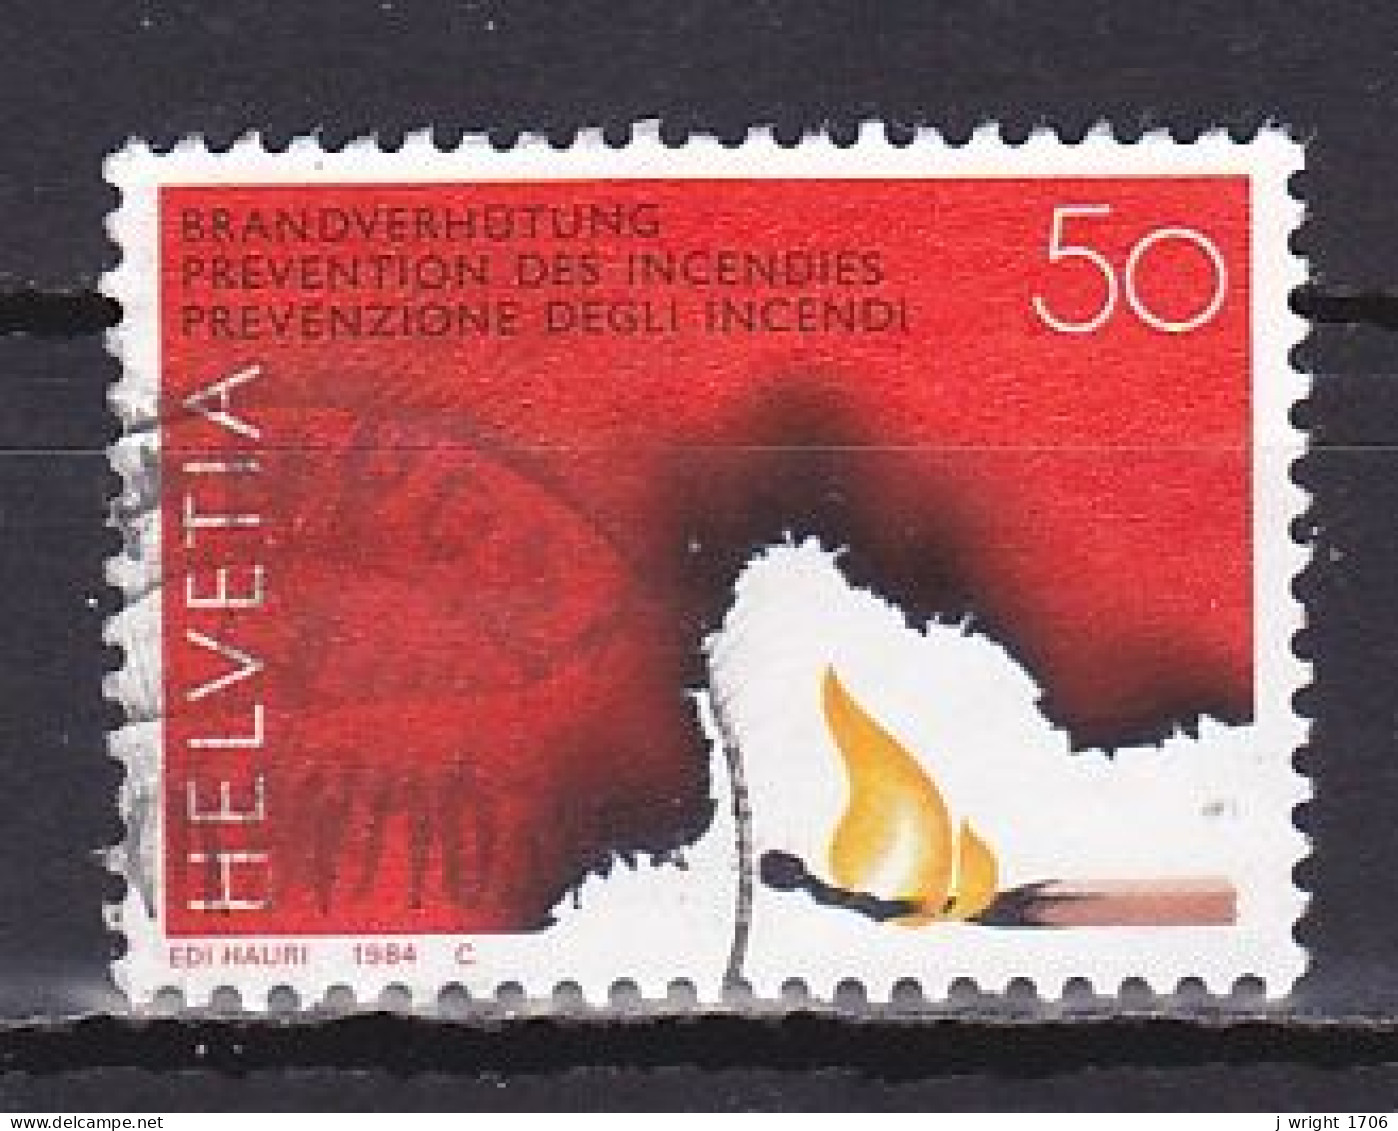 Switzerland, 1984, Publicity Issue/Fire Prevention, 50c, USED - Usati